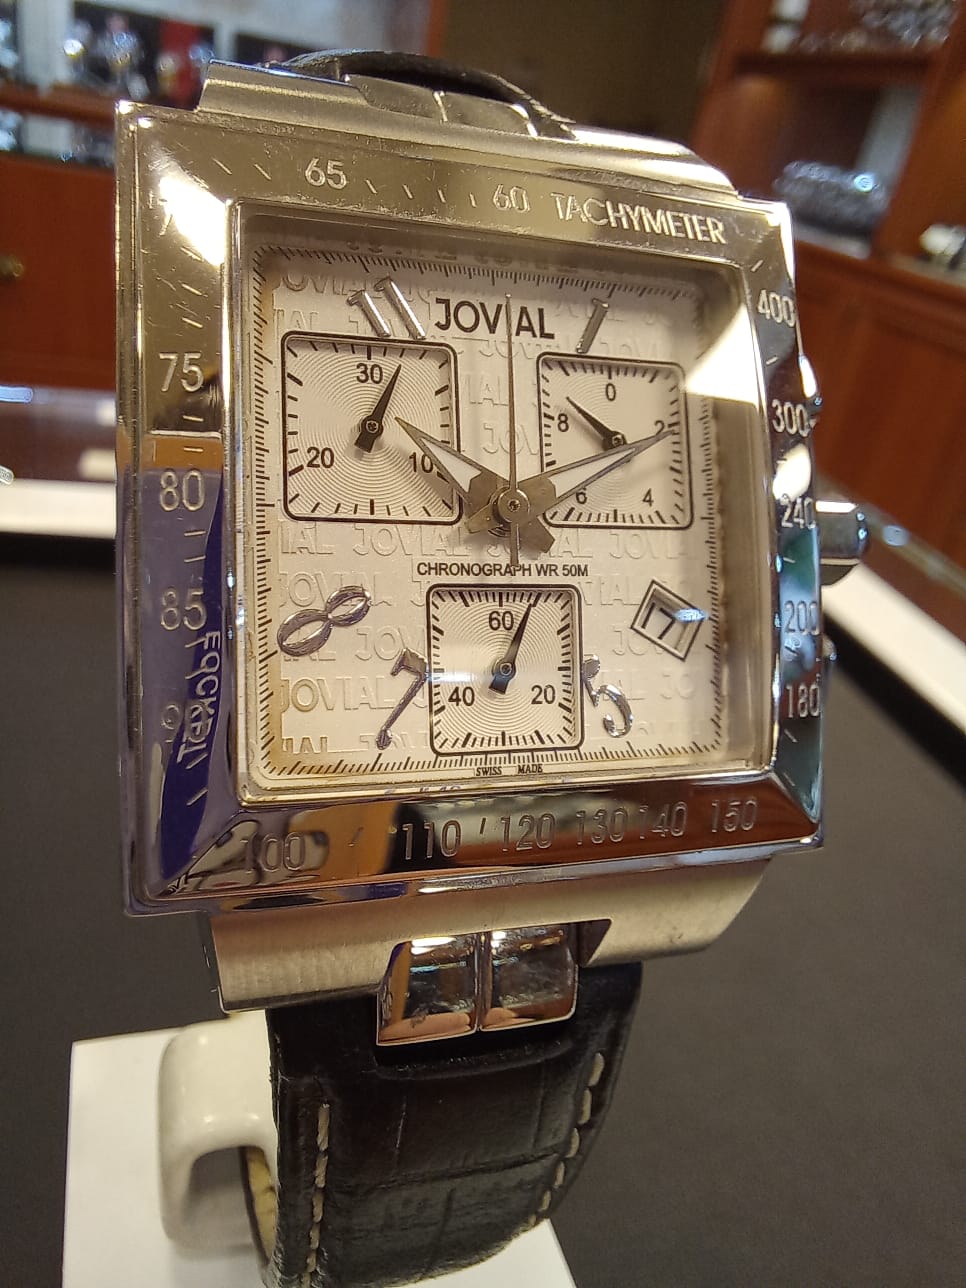 Buy Jovial Classic women's Watch 08031-LSM-04 - Ashford.com